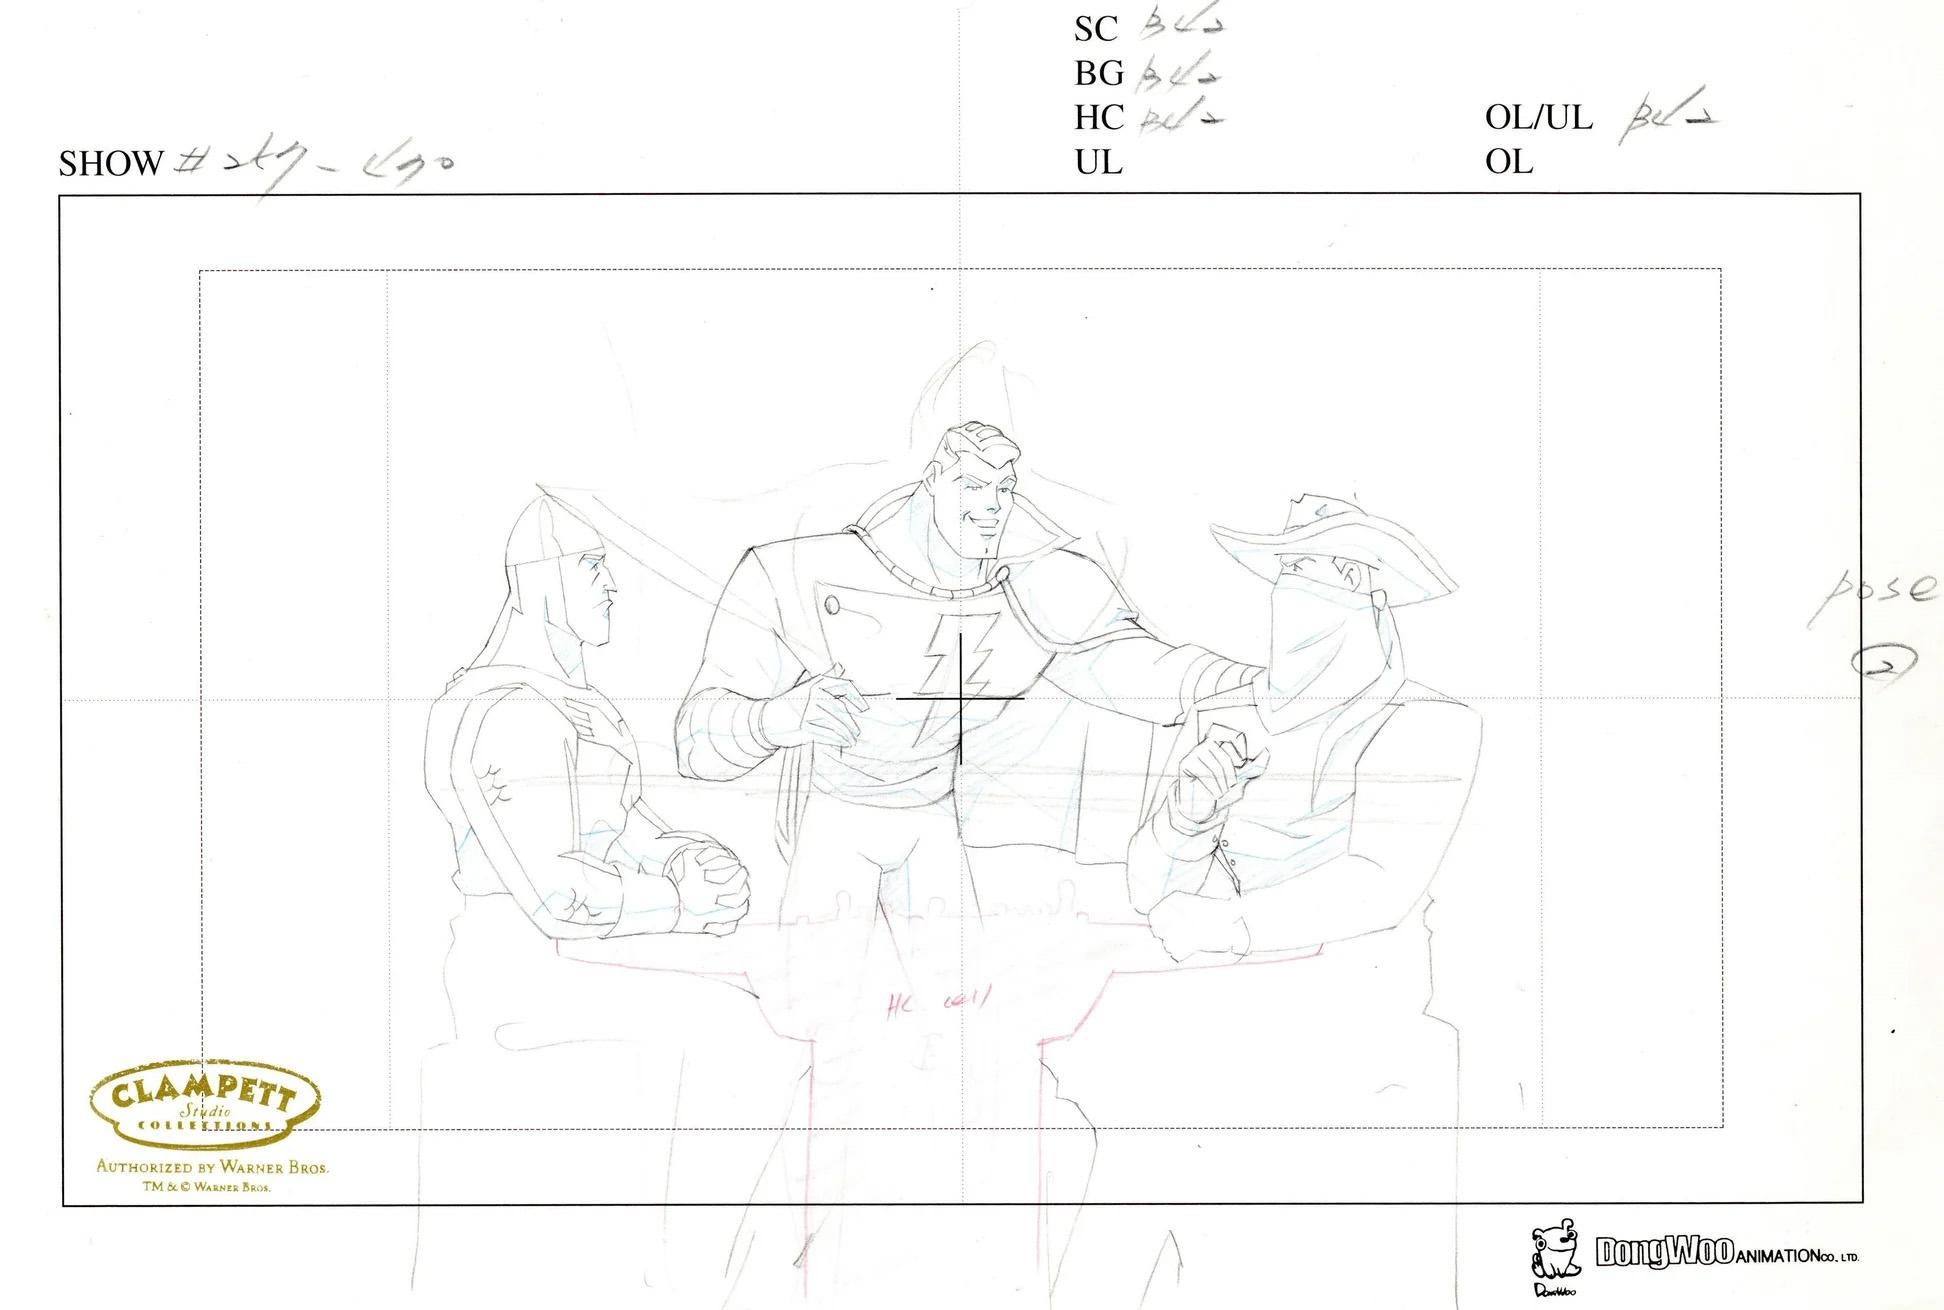 Justice League Original Production Drawing: Shining Knight, Vigilante, Shazam - Art by DC Comics Studio Artists